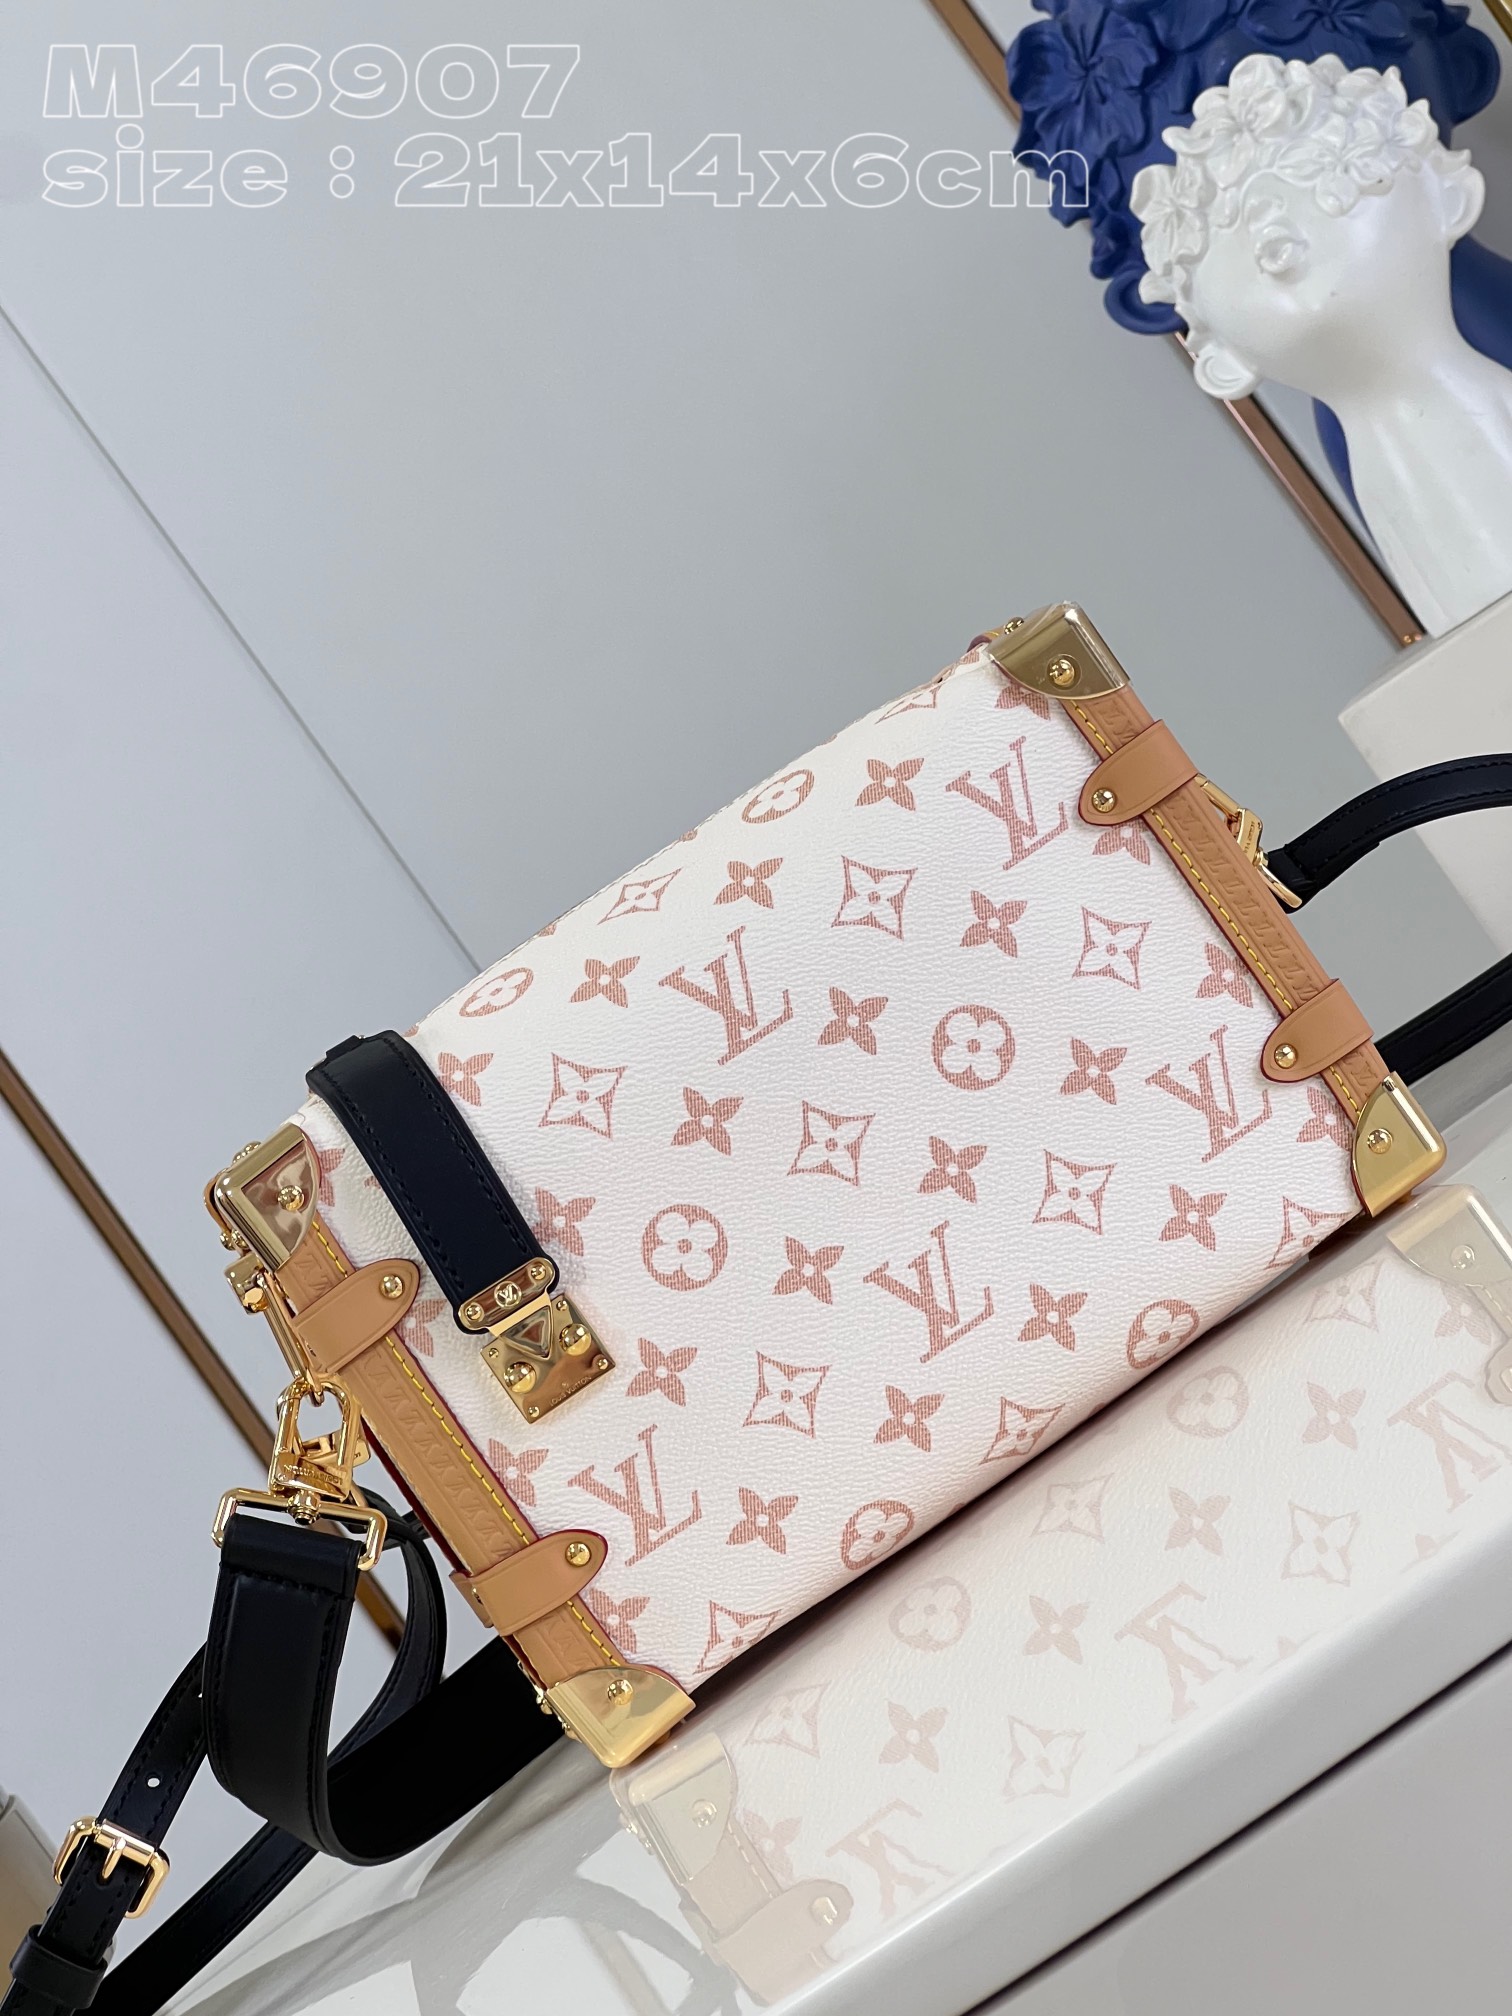 What 1:1 replica
 Louis Vuitton Bags Handbags Monogram Canvas M46907